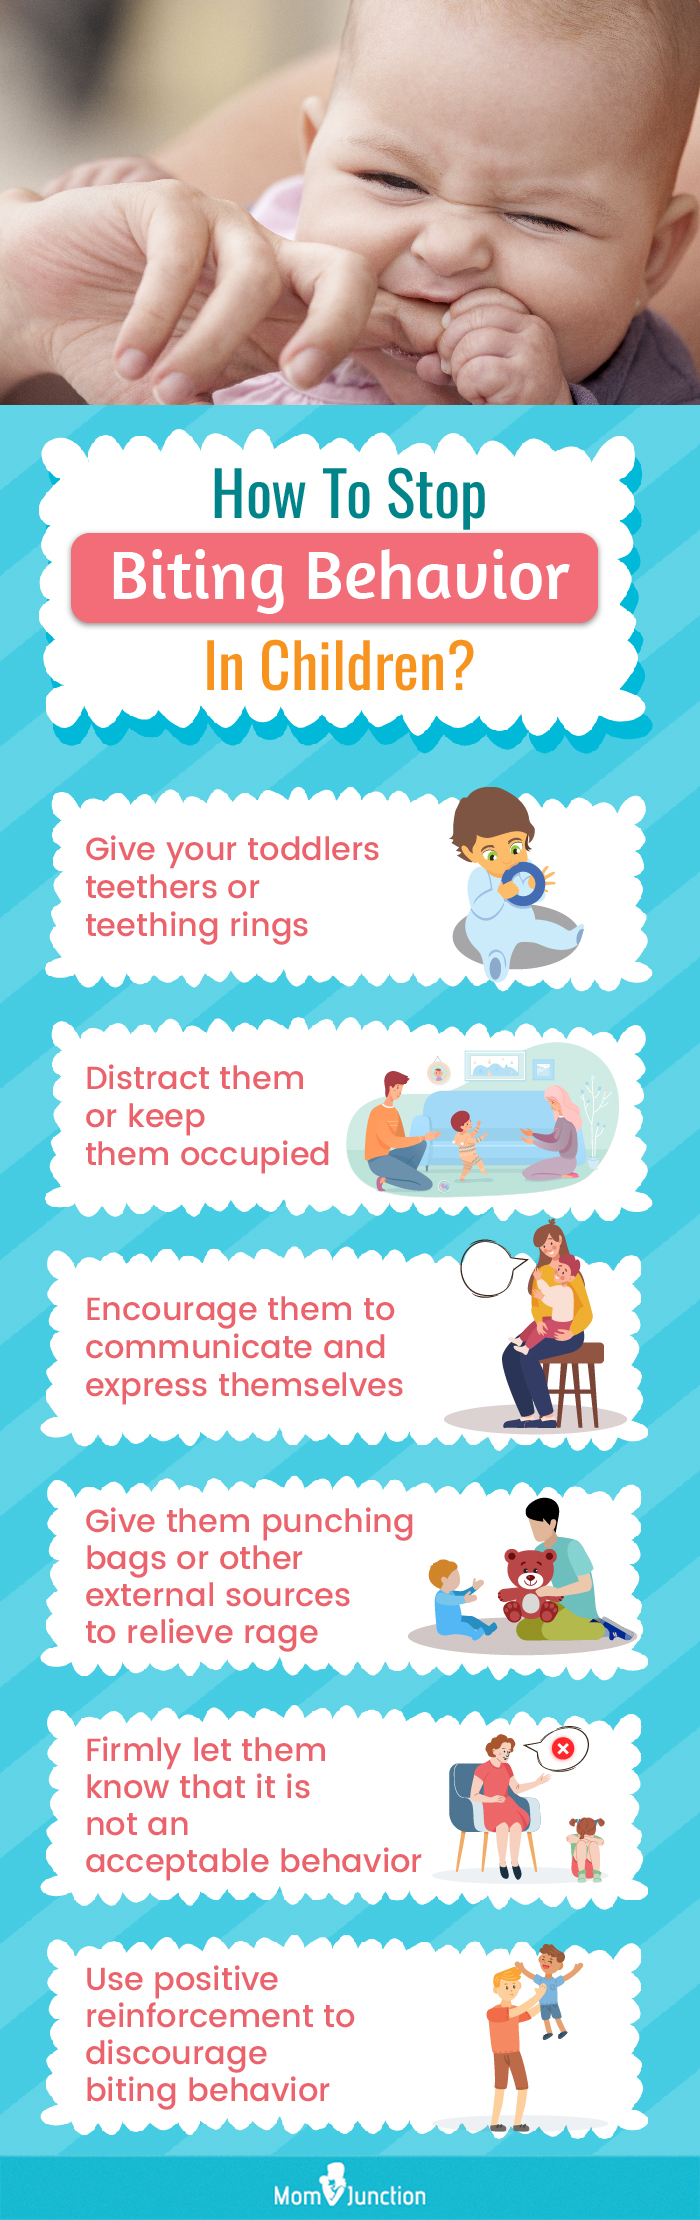 how to stop biting behavior in children (infographic)